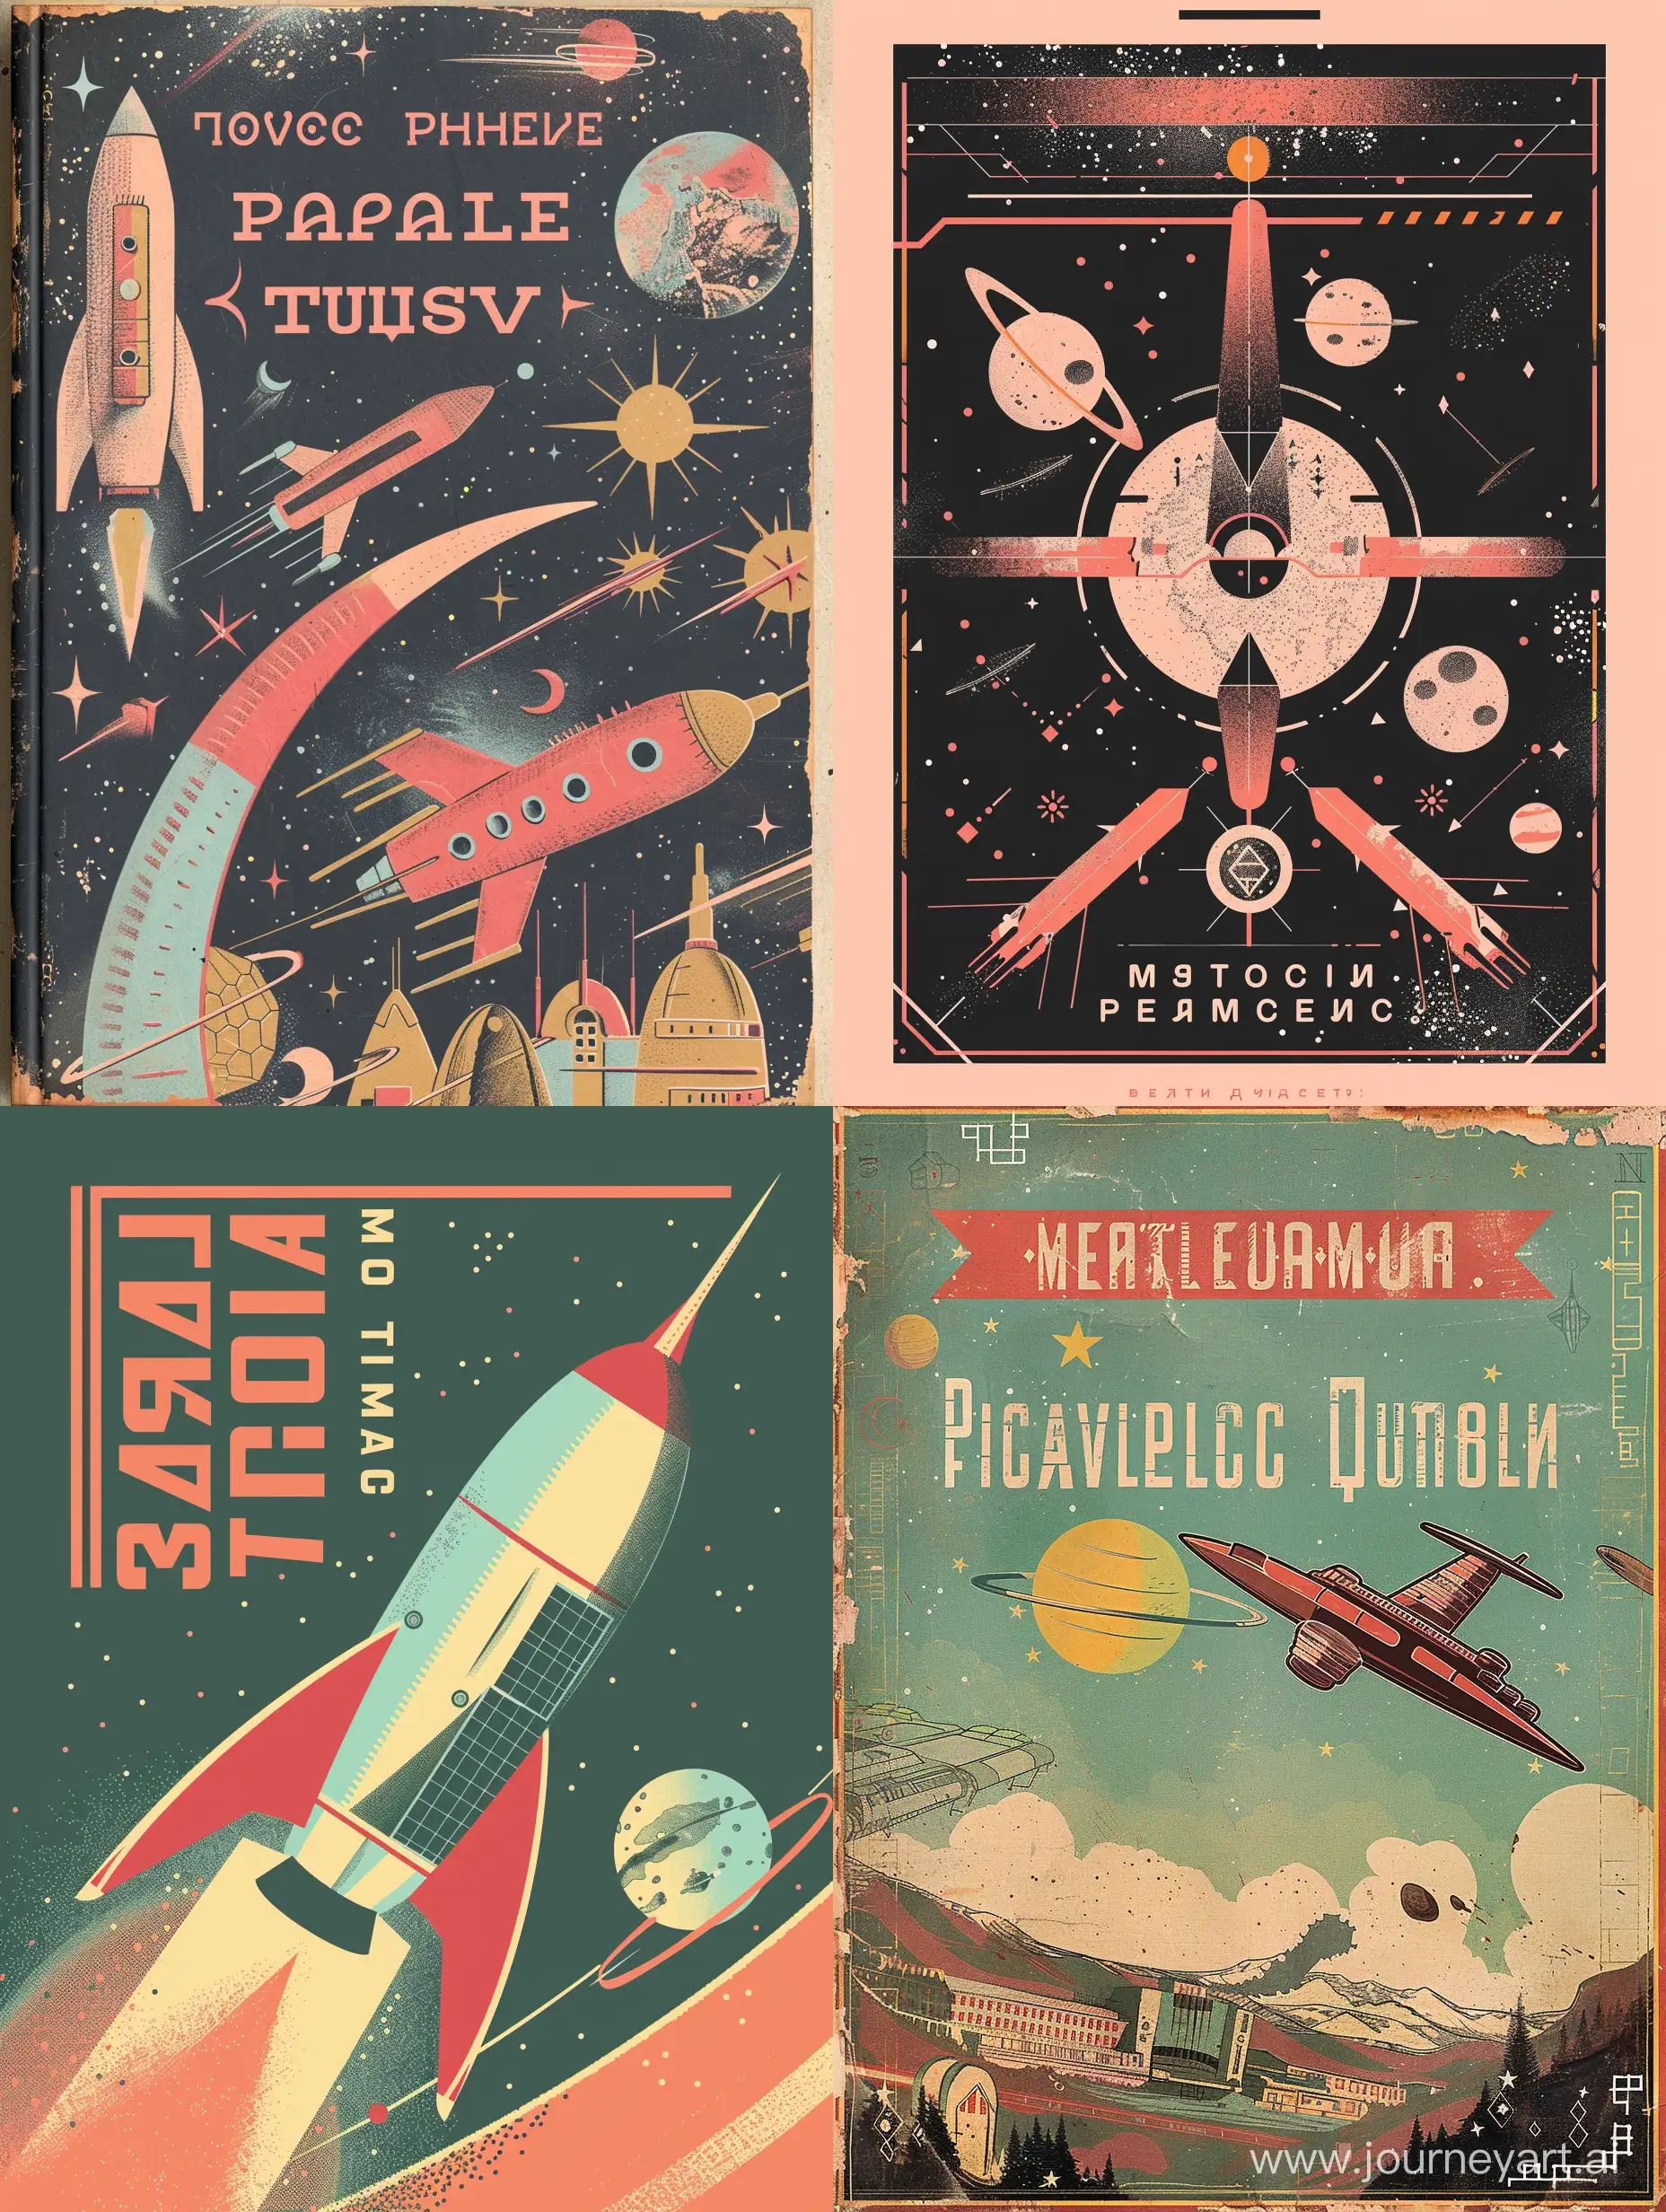 The cover of a book on intergalactic travel. Pastel colors . Soviet Union style. Sovietpunk. Retrofuturism.